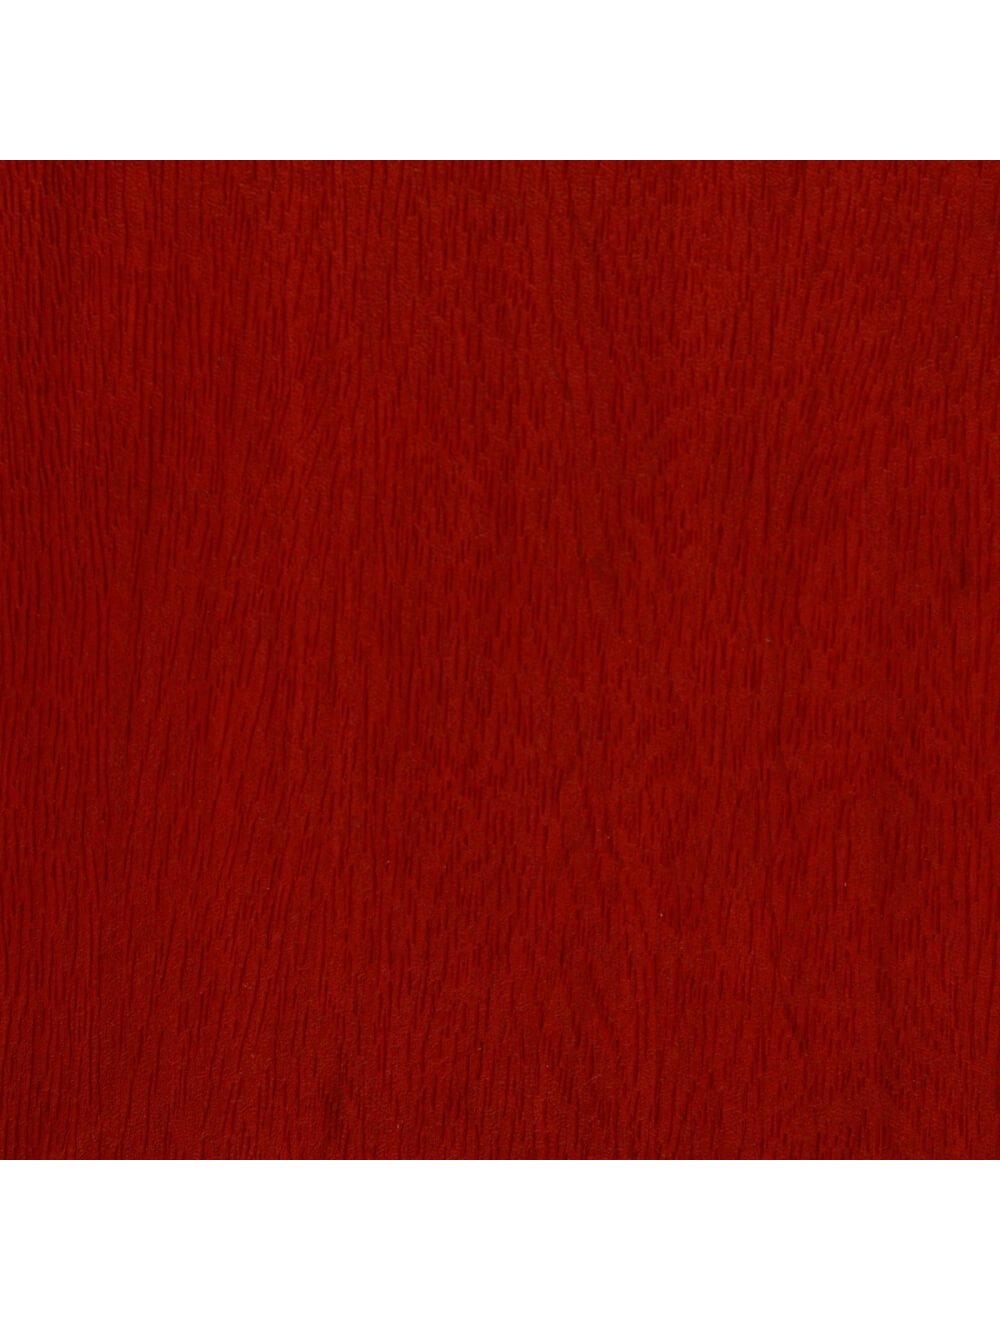 Washington Red Wood Grain uzorak materijala (E948)